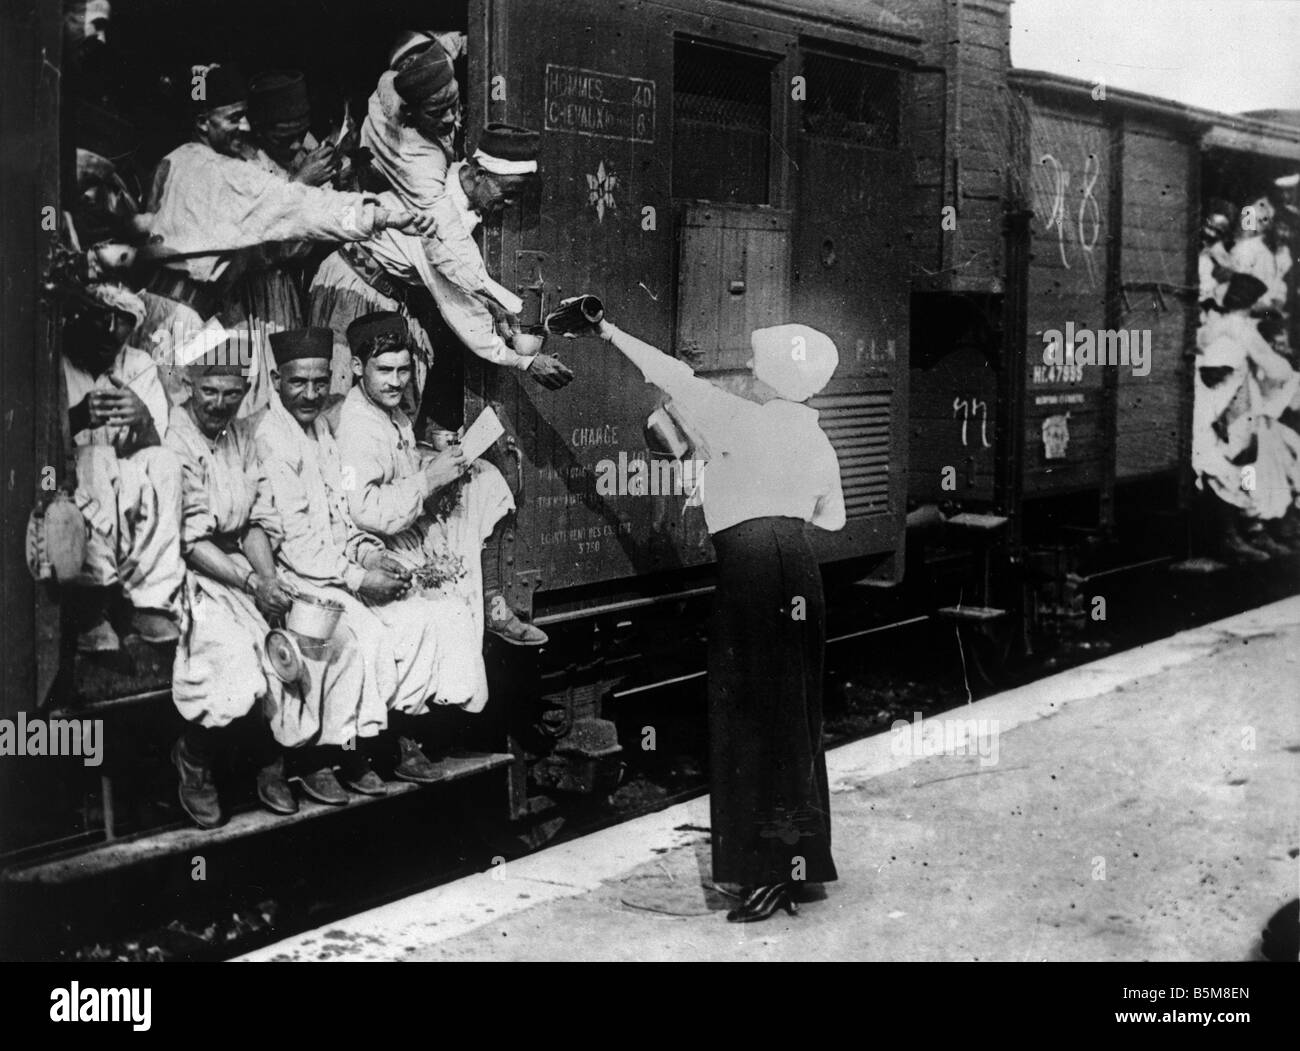 Los turcos en Champigny station foto historia de la I Guerra Mundial Francia turcos en Champigny estación antes del viaje a la foto frontal Foto de stock